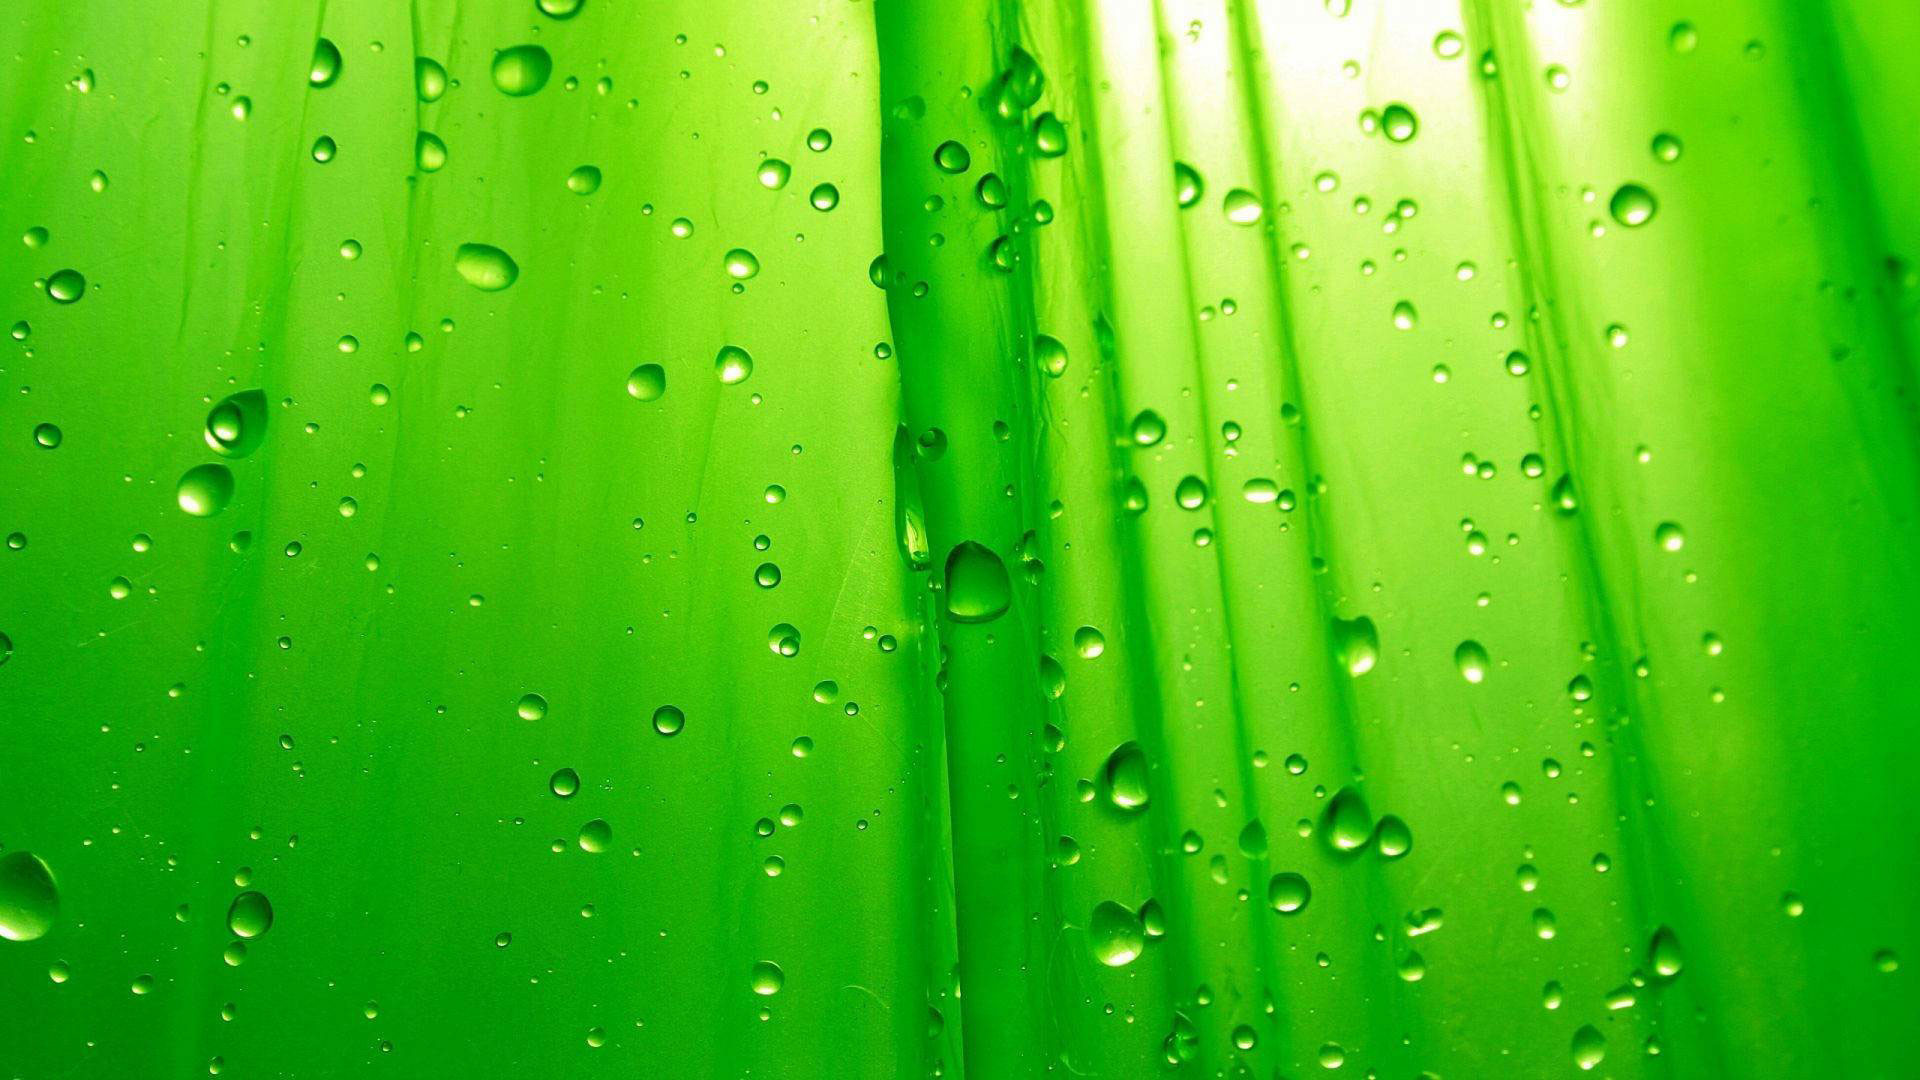 1920x1080 hd pics photos green nature water drops desktop background wallpaper